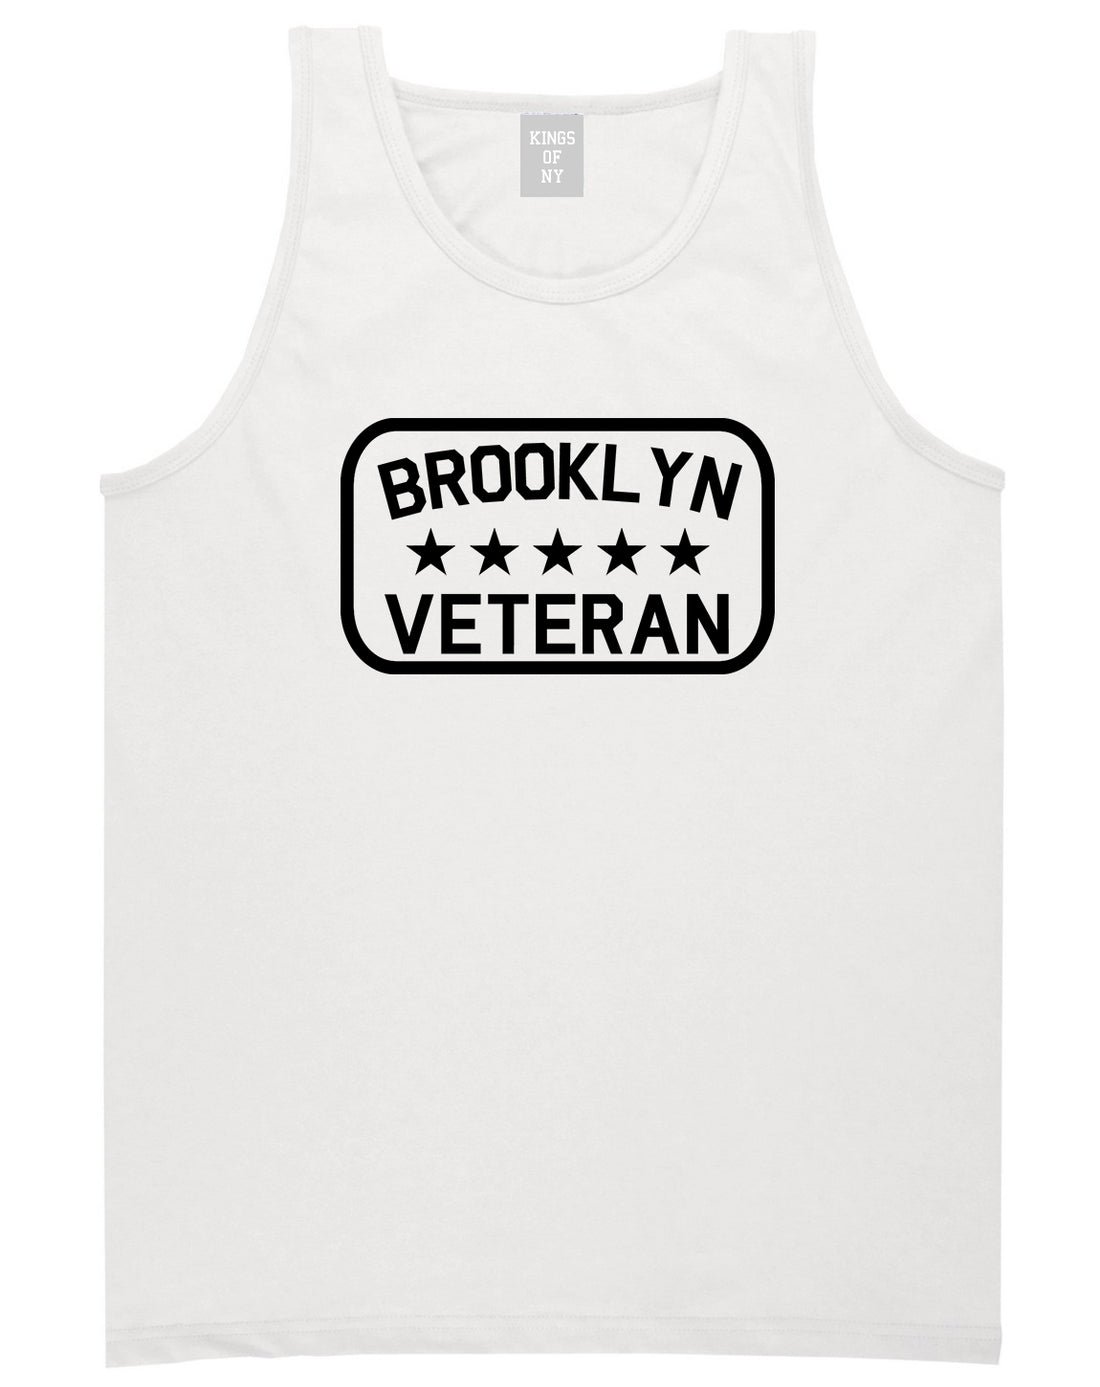 Brooklyn Veteran Mens Tank Top Shirt White